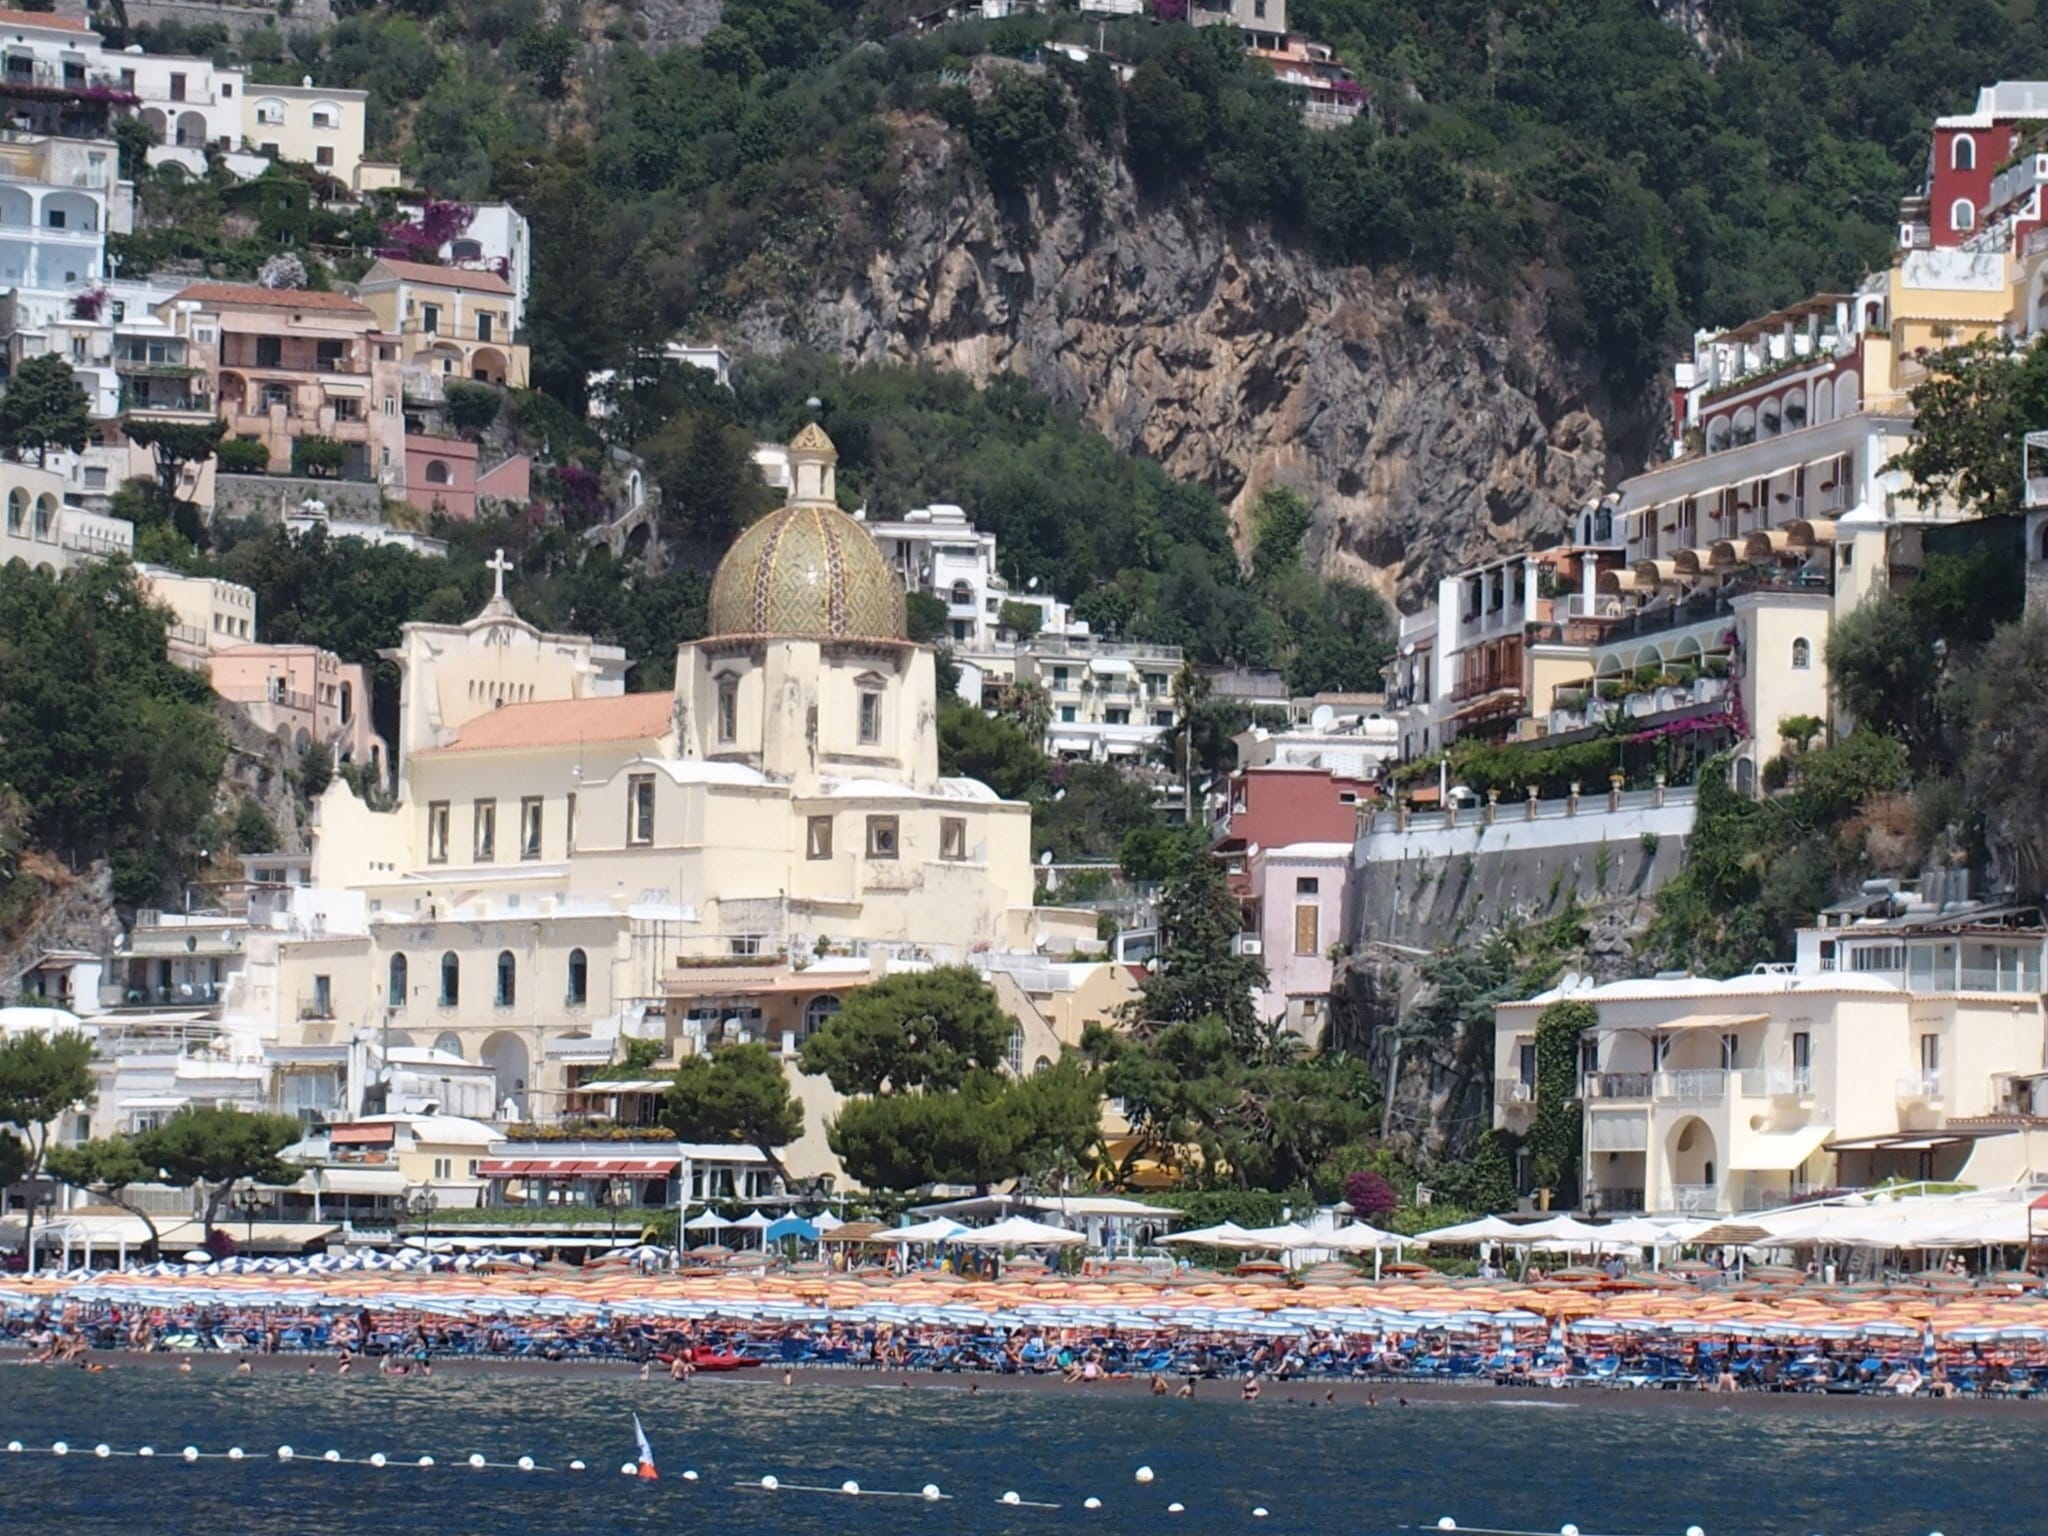 Hotel Review: Hotel Santa Caterina, Amalfi Coast